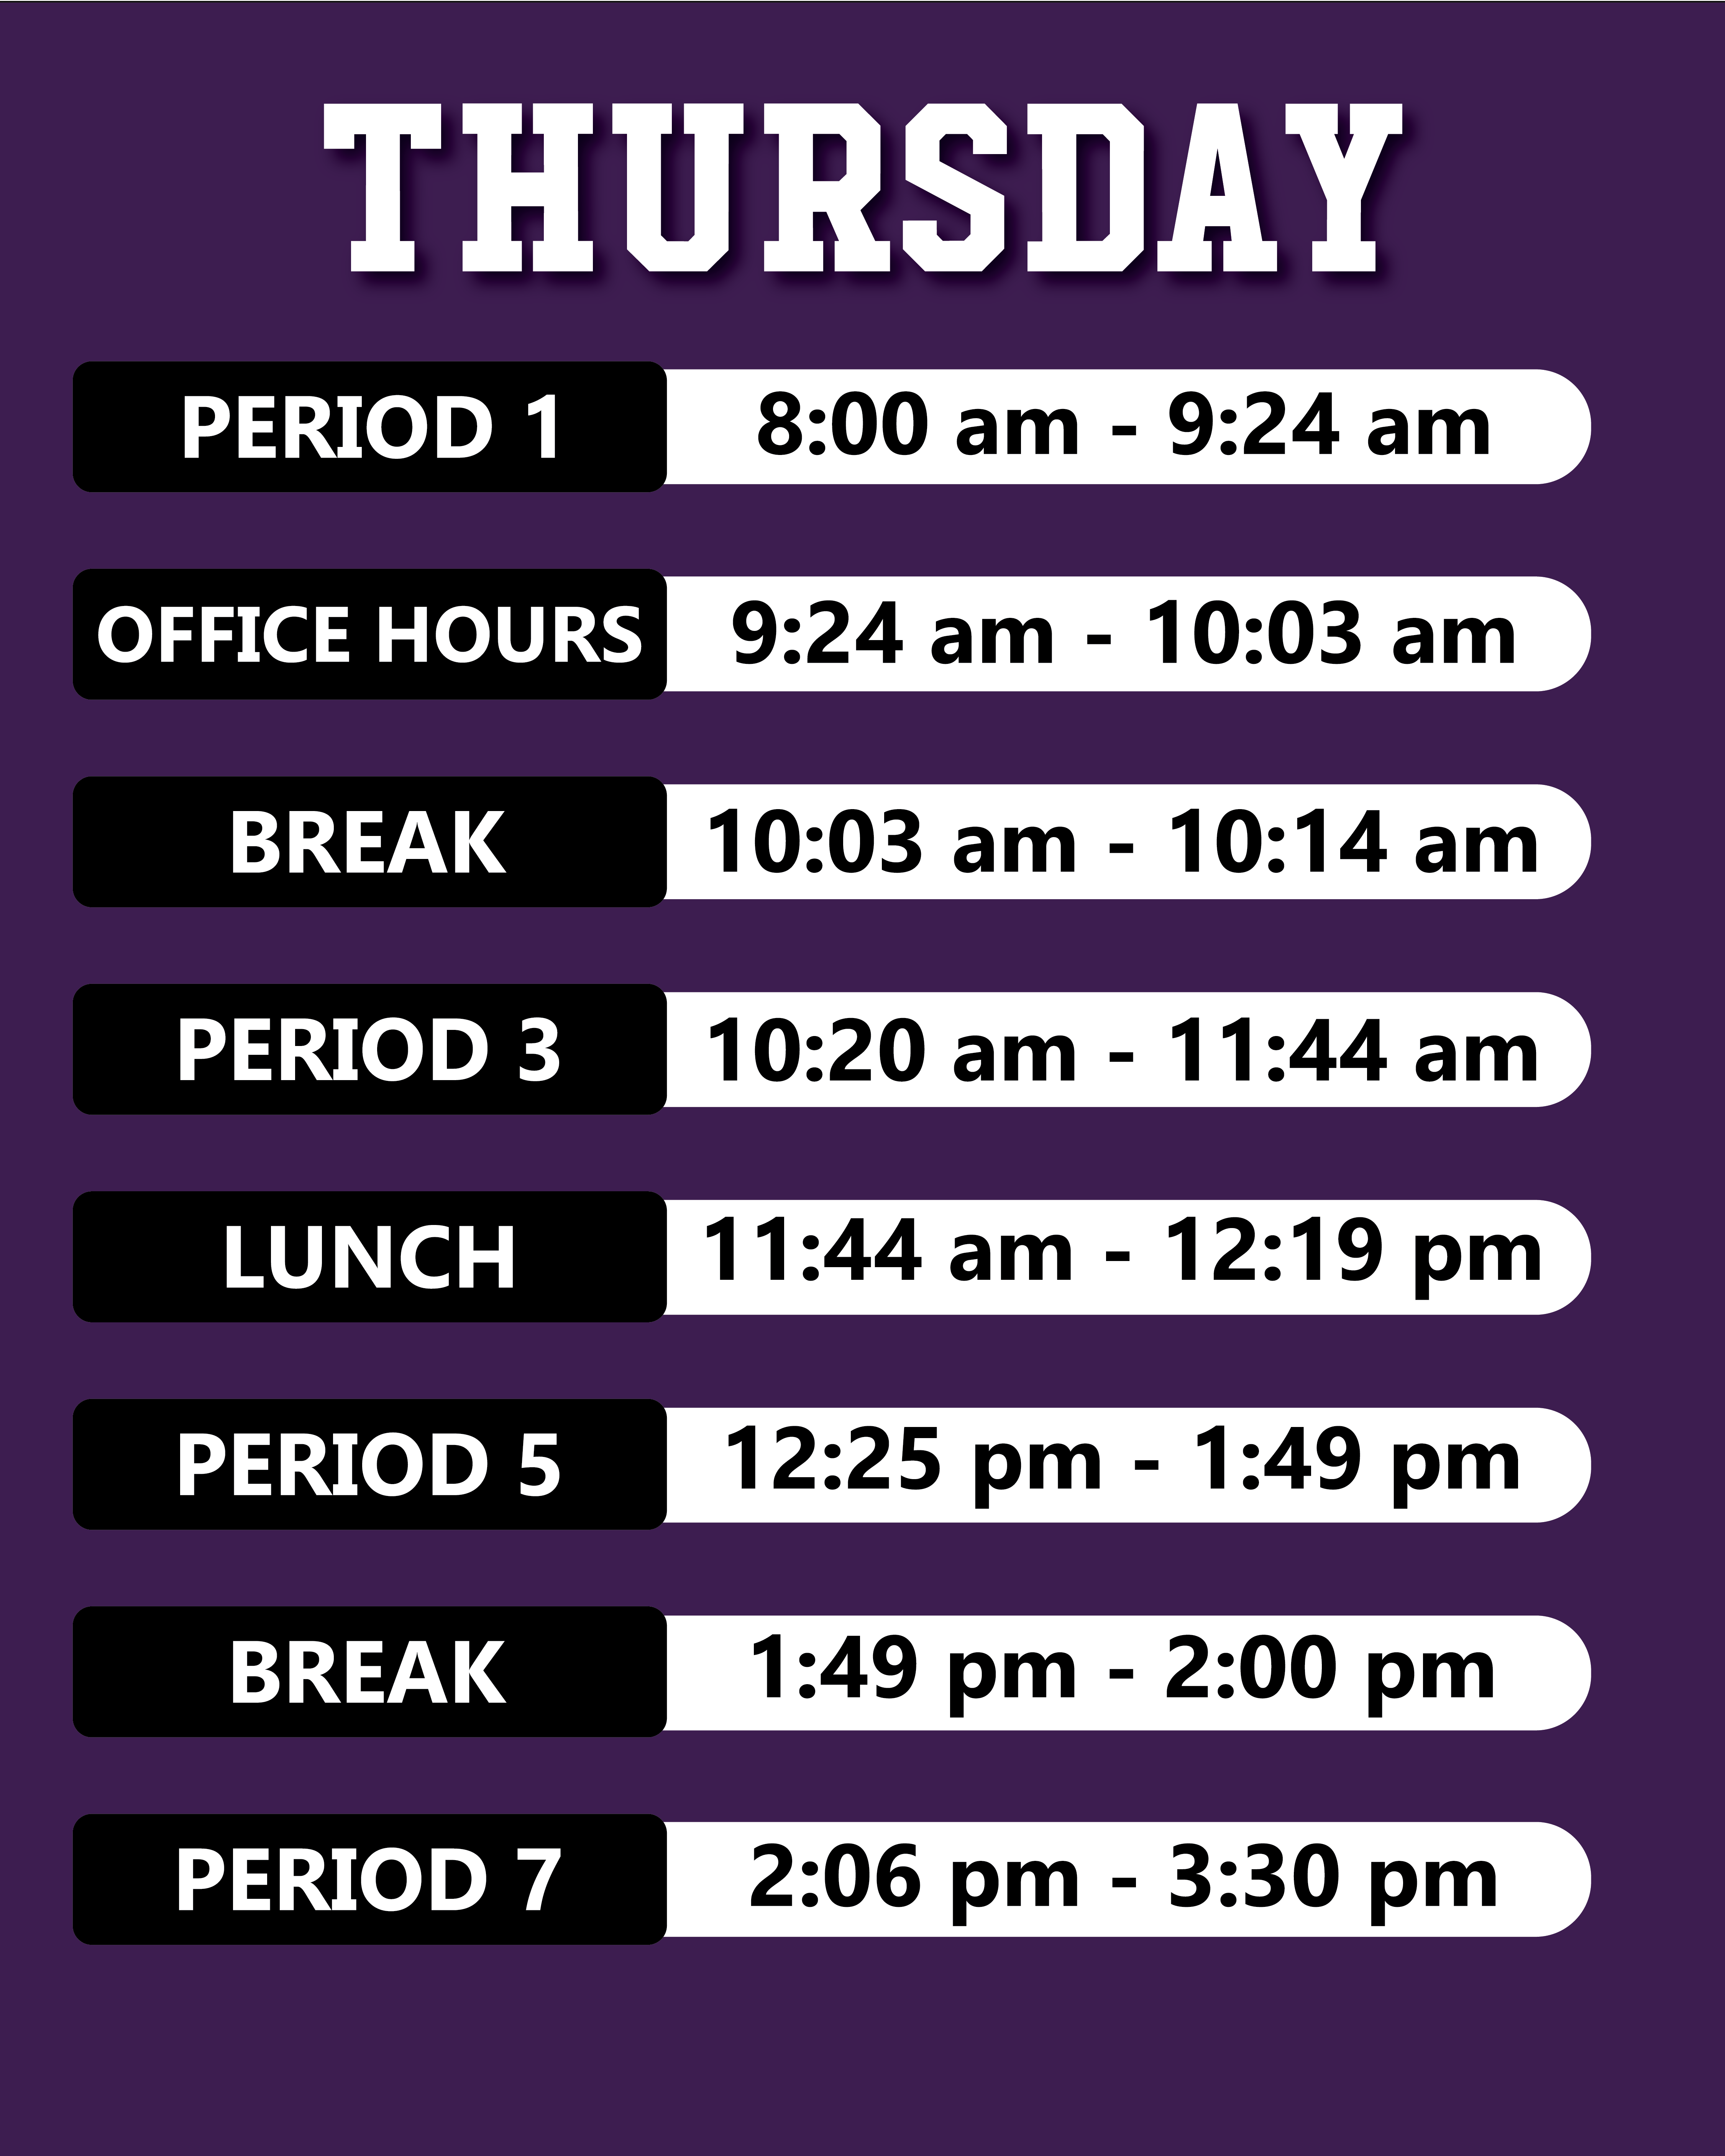 Thursday schedule